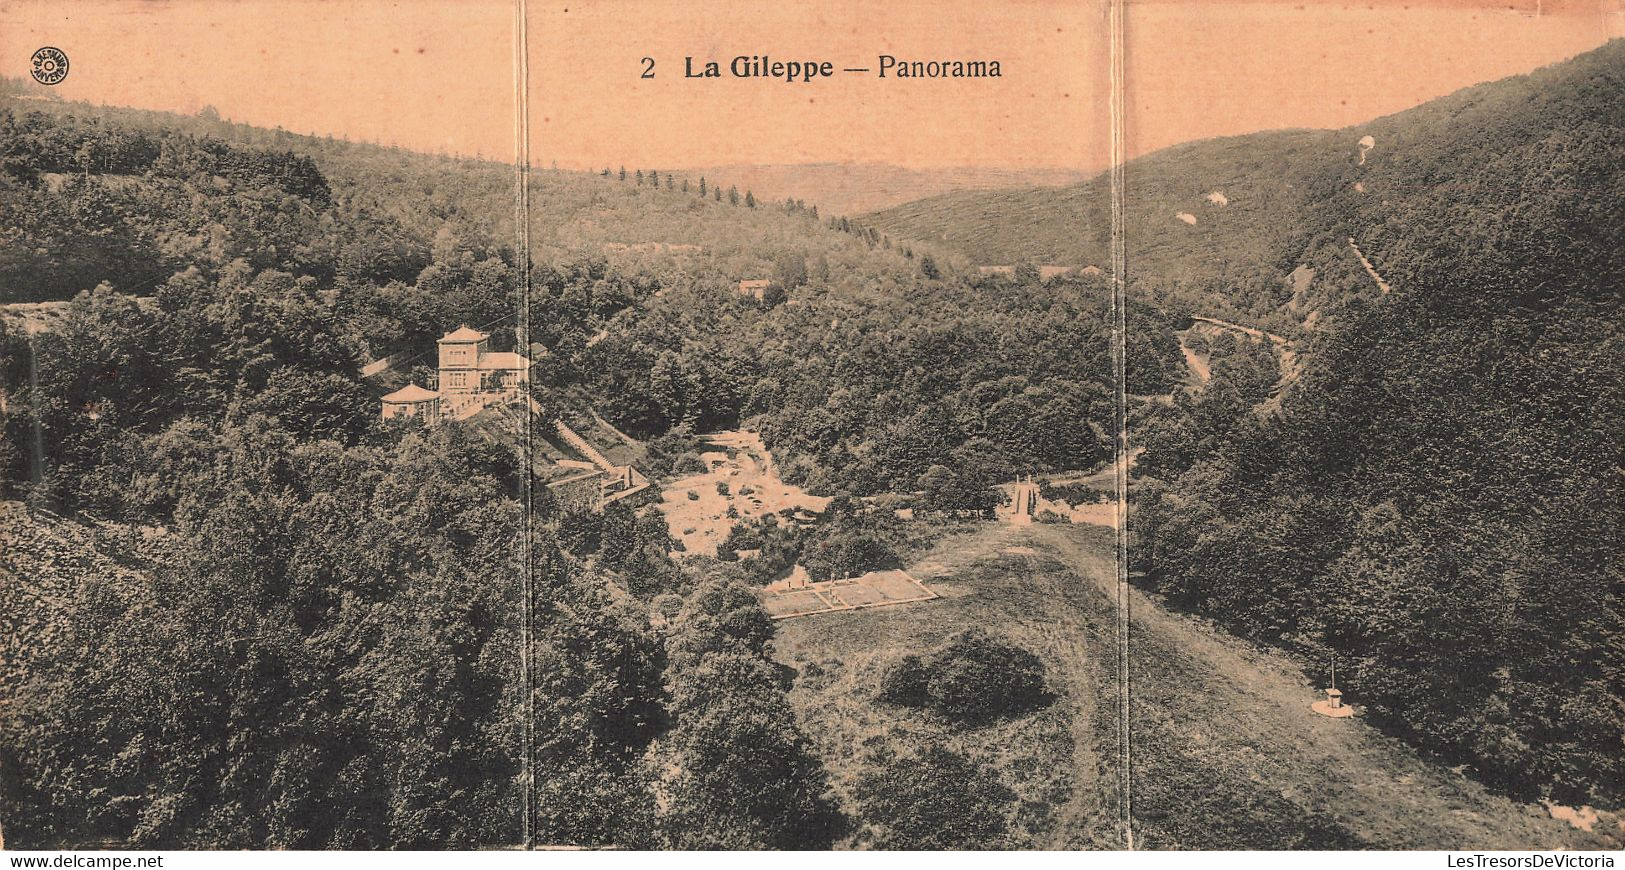 Panoramique - La Gileppe - Panorama - Edit. G. Hermans - Imp. Drukxerk - Dim.26/12 Cm - Carte Postale Ancienne - Verviers